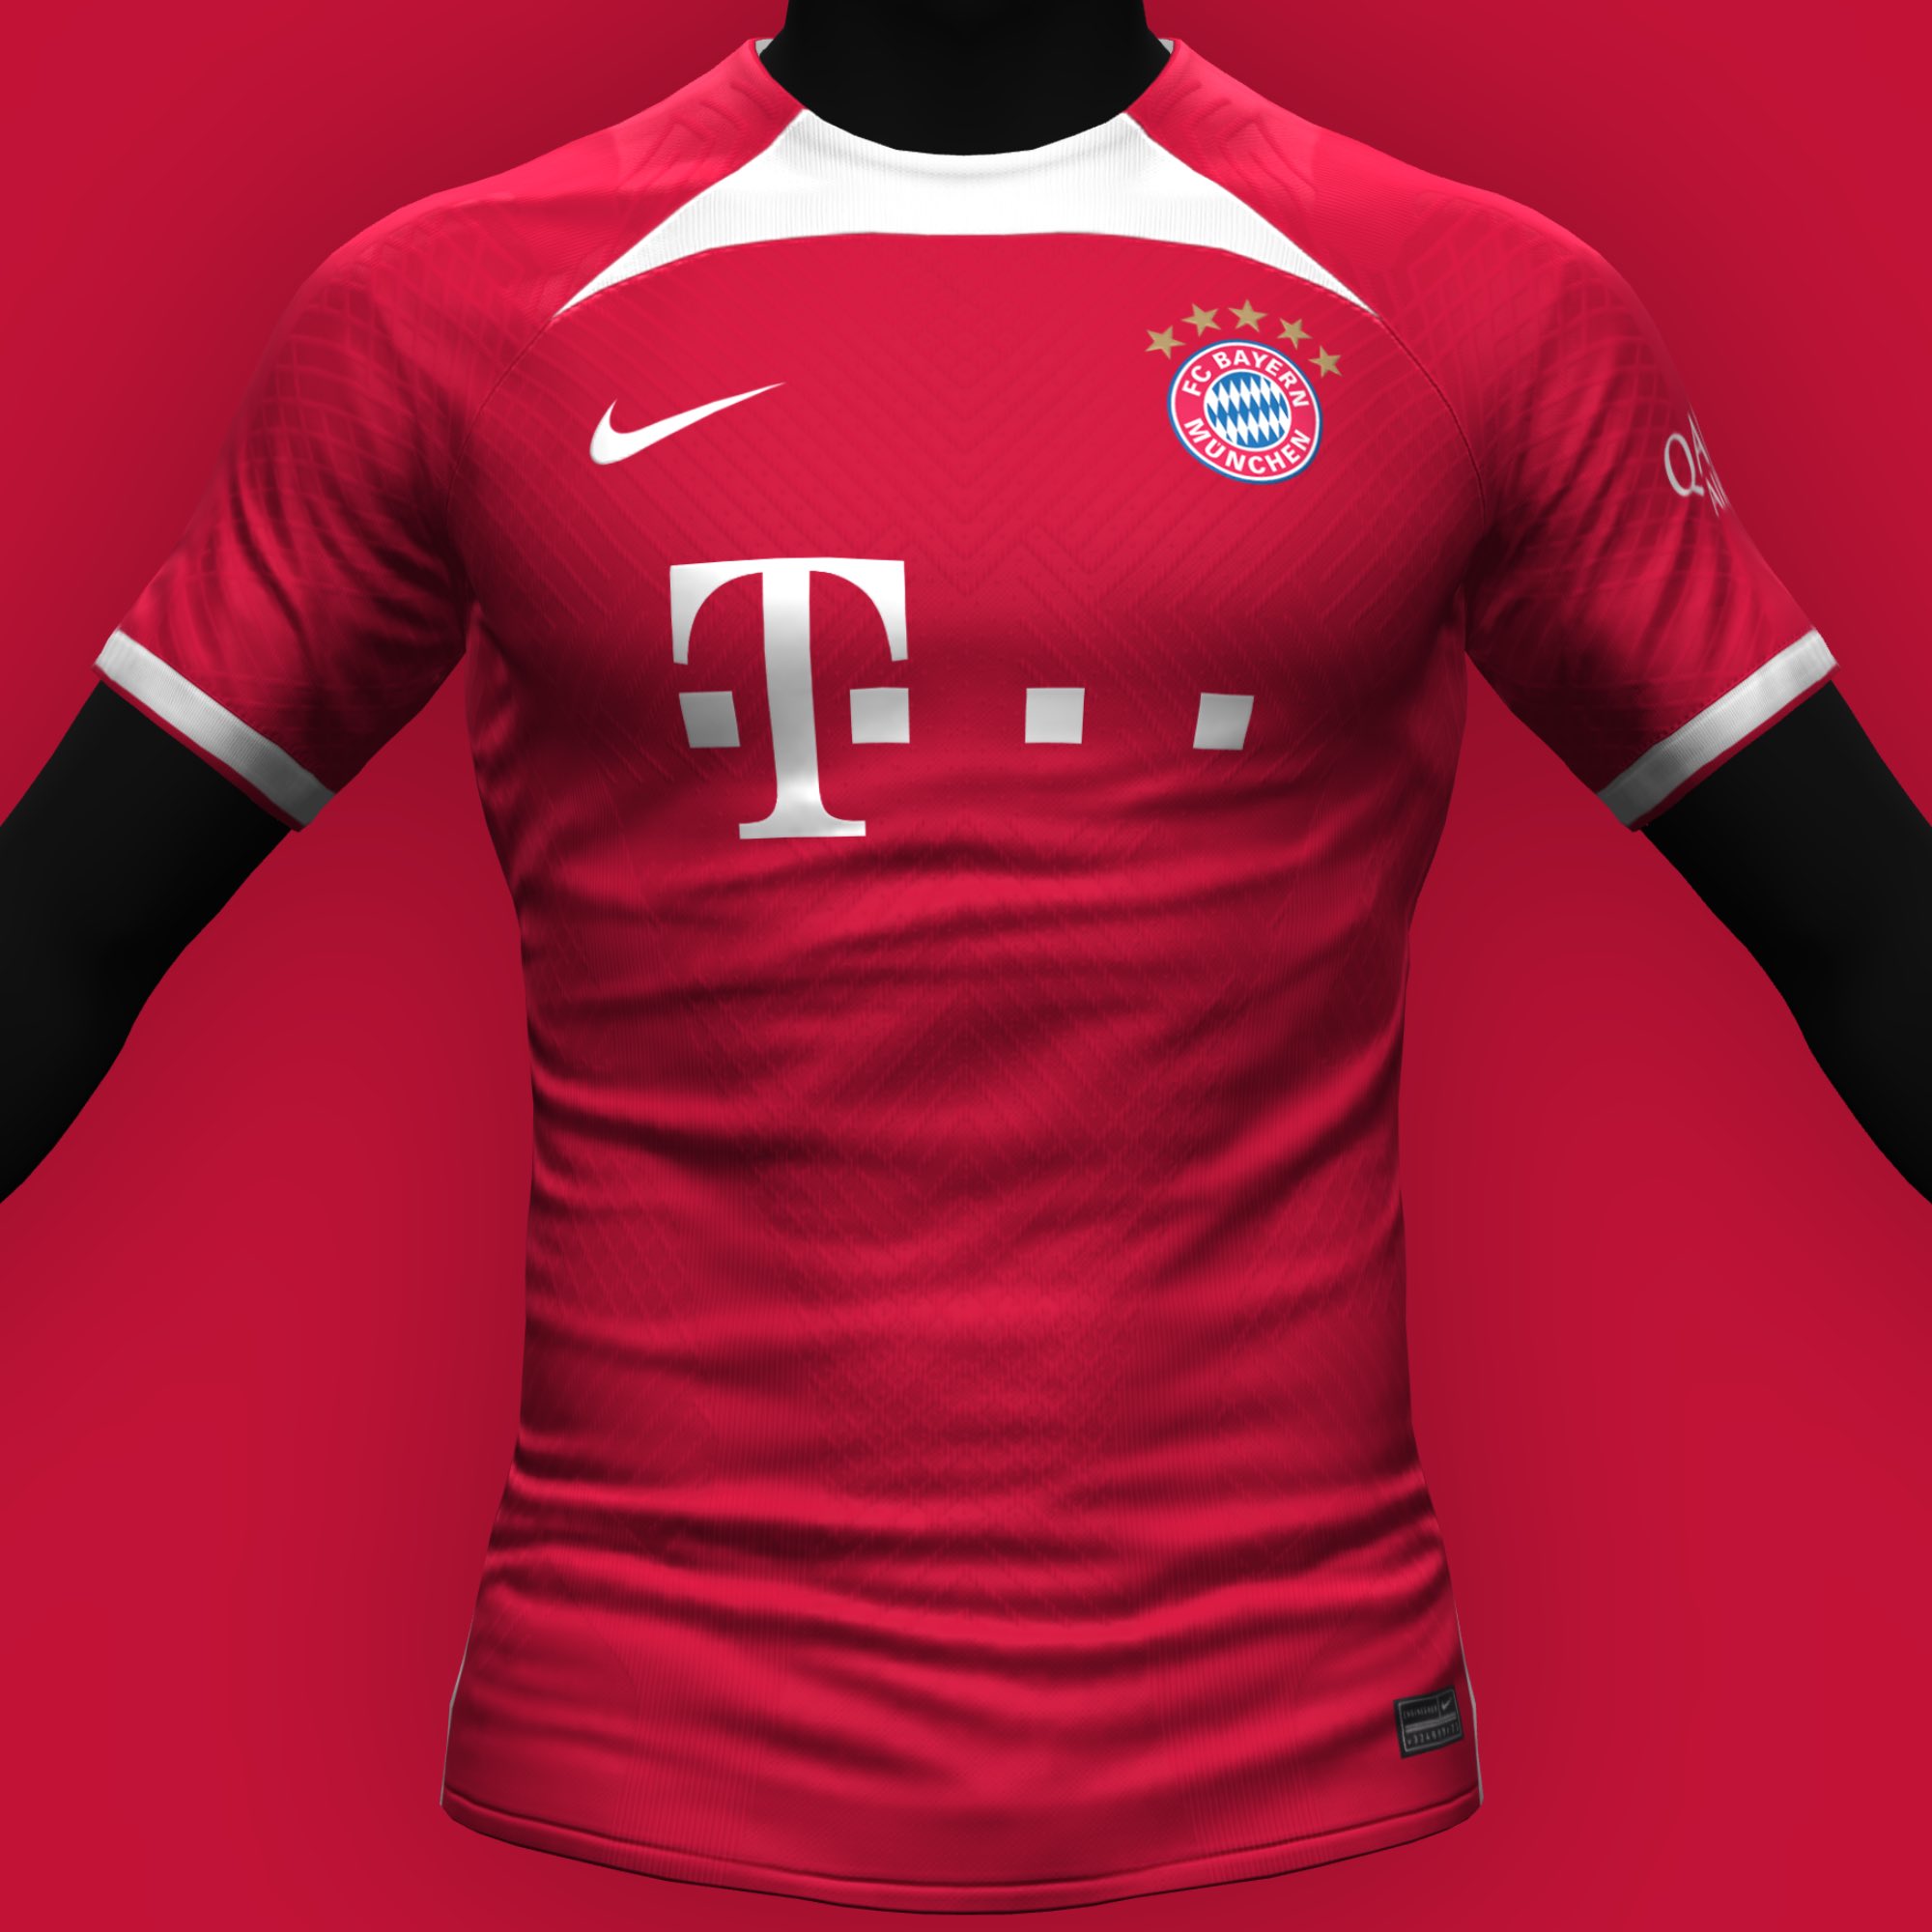 Klokje Vlek Kort geleden cj23designs on Twitter: "Bayern Munich X Nike concept @fifakitcreator # bayern #fcbayern #bayernmunich #bayernmunchen #fcbayernmunich  #fcbayernmünchen #fcb #bundesliga #nike #nikefootball #fifa22  #efootball2022 https://t.co/4NcjGXyzk1" / Twitter